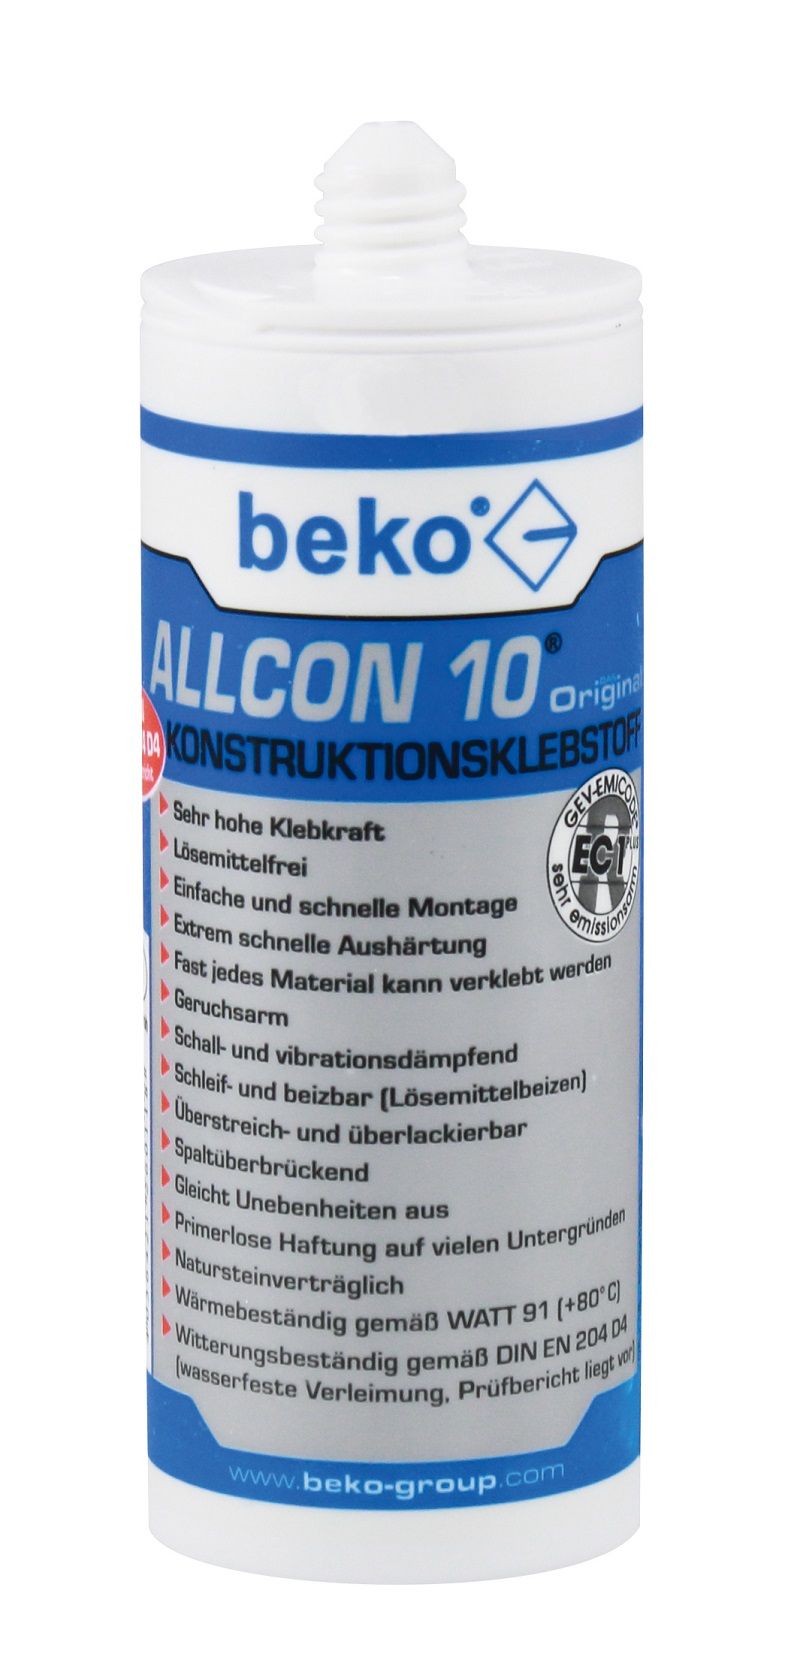 Beko Allcon 10 Konstruktionsklebstoff 150 ml 